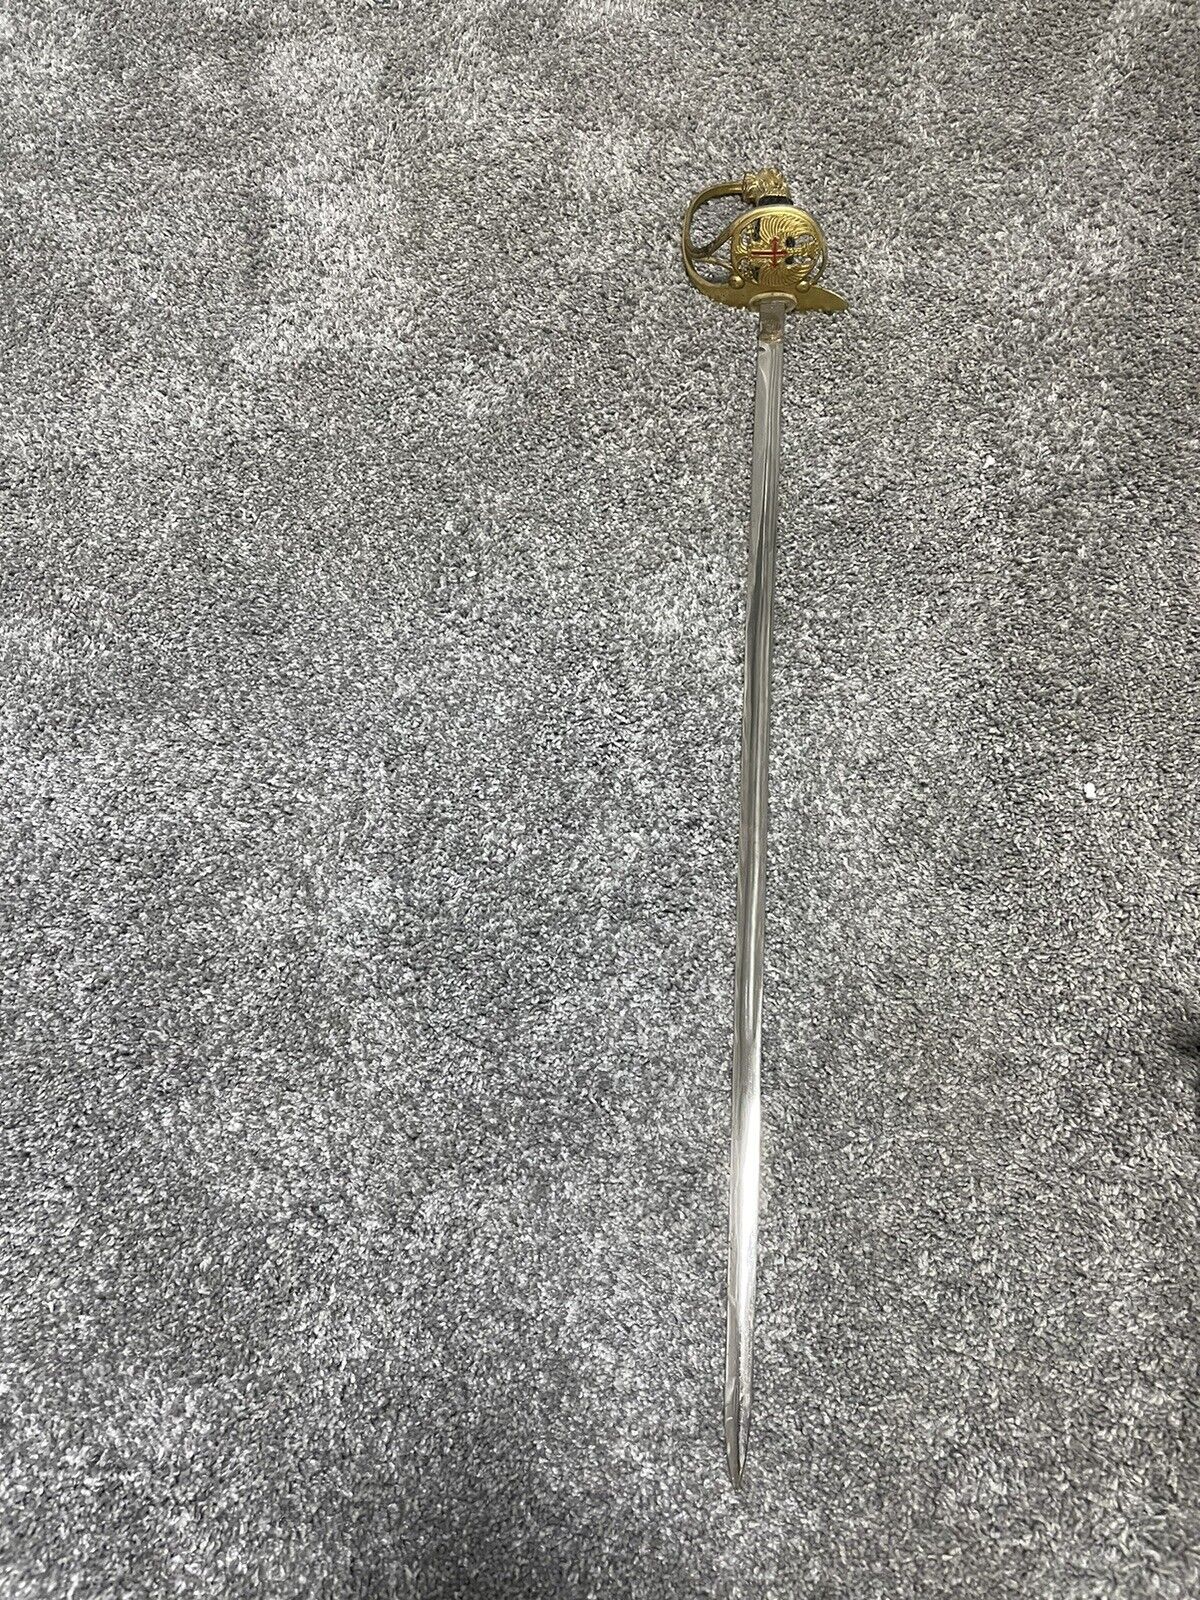 Original Vintage Spanish Toledo Lion Head Sword with S cabbard